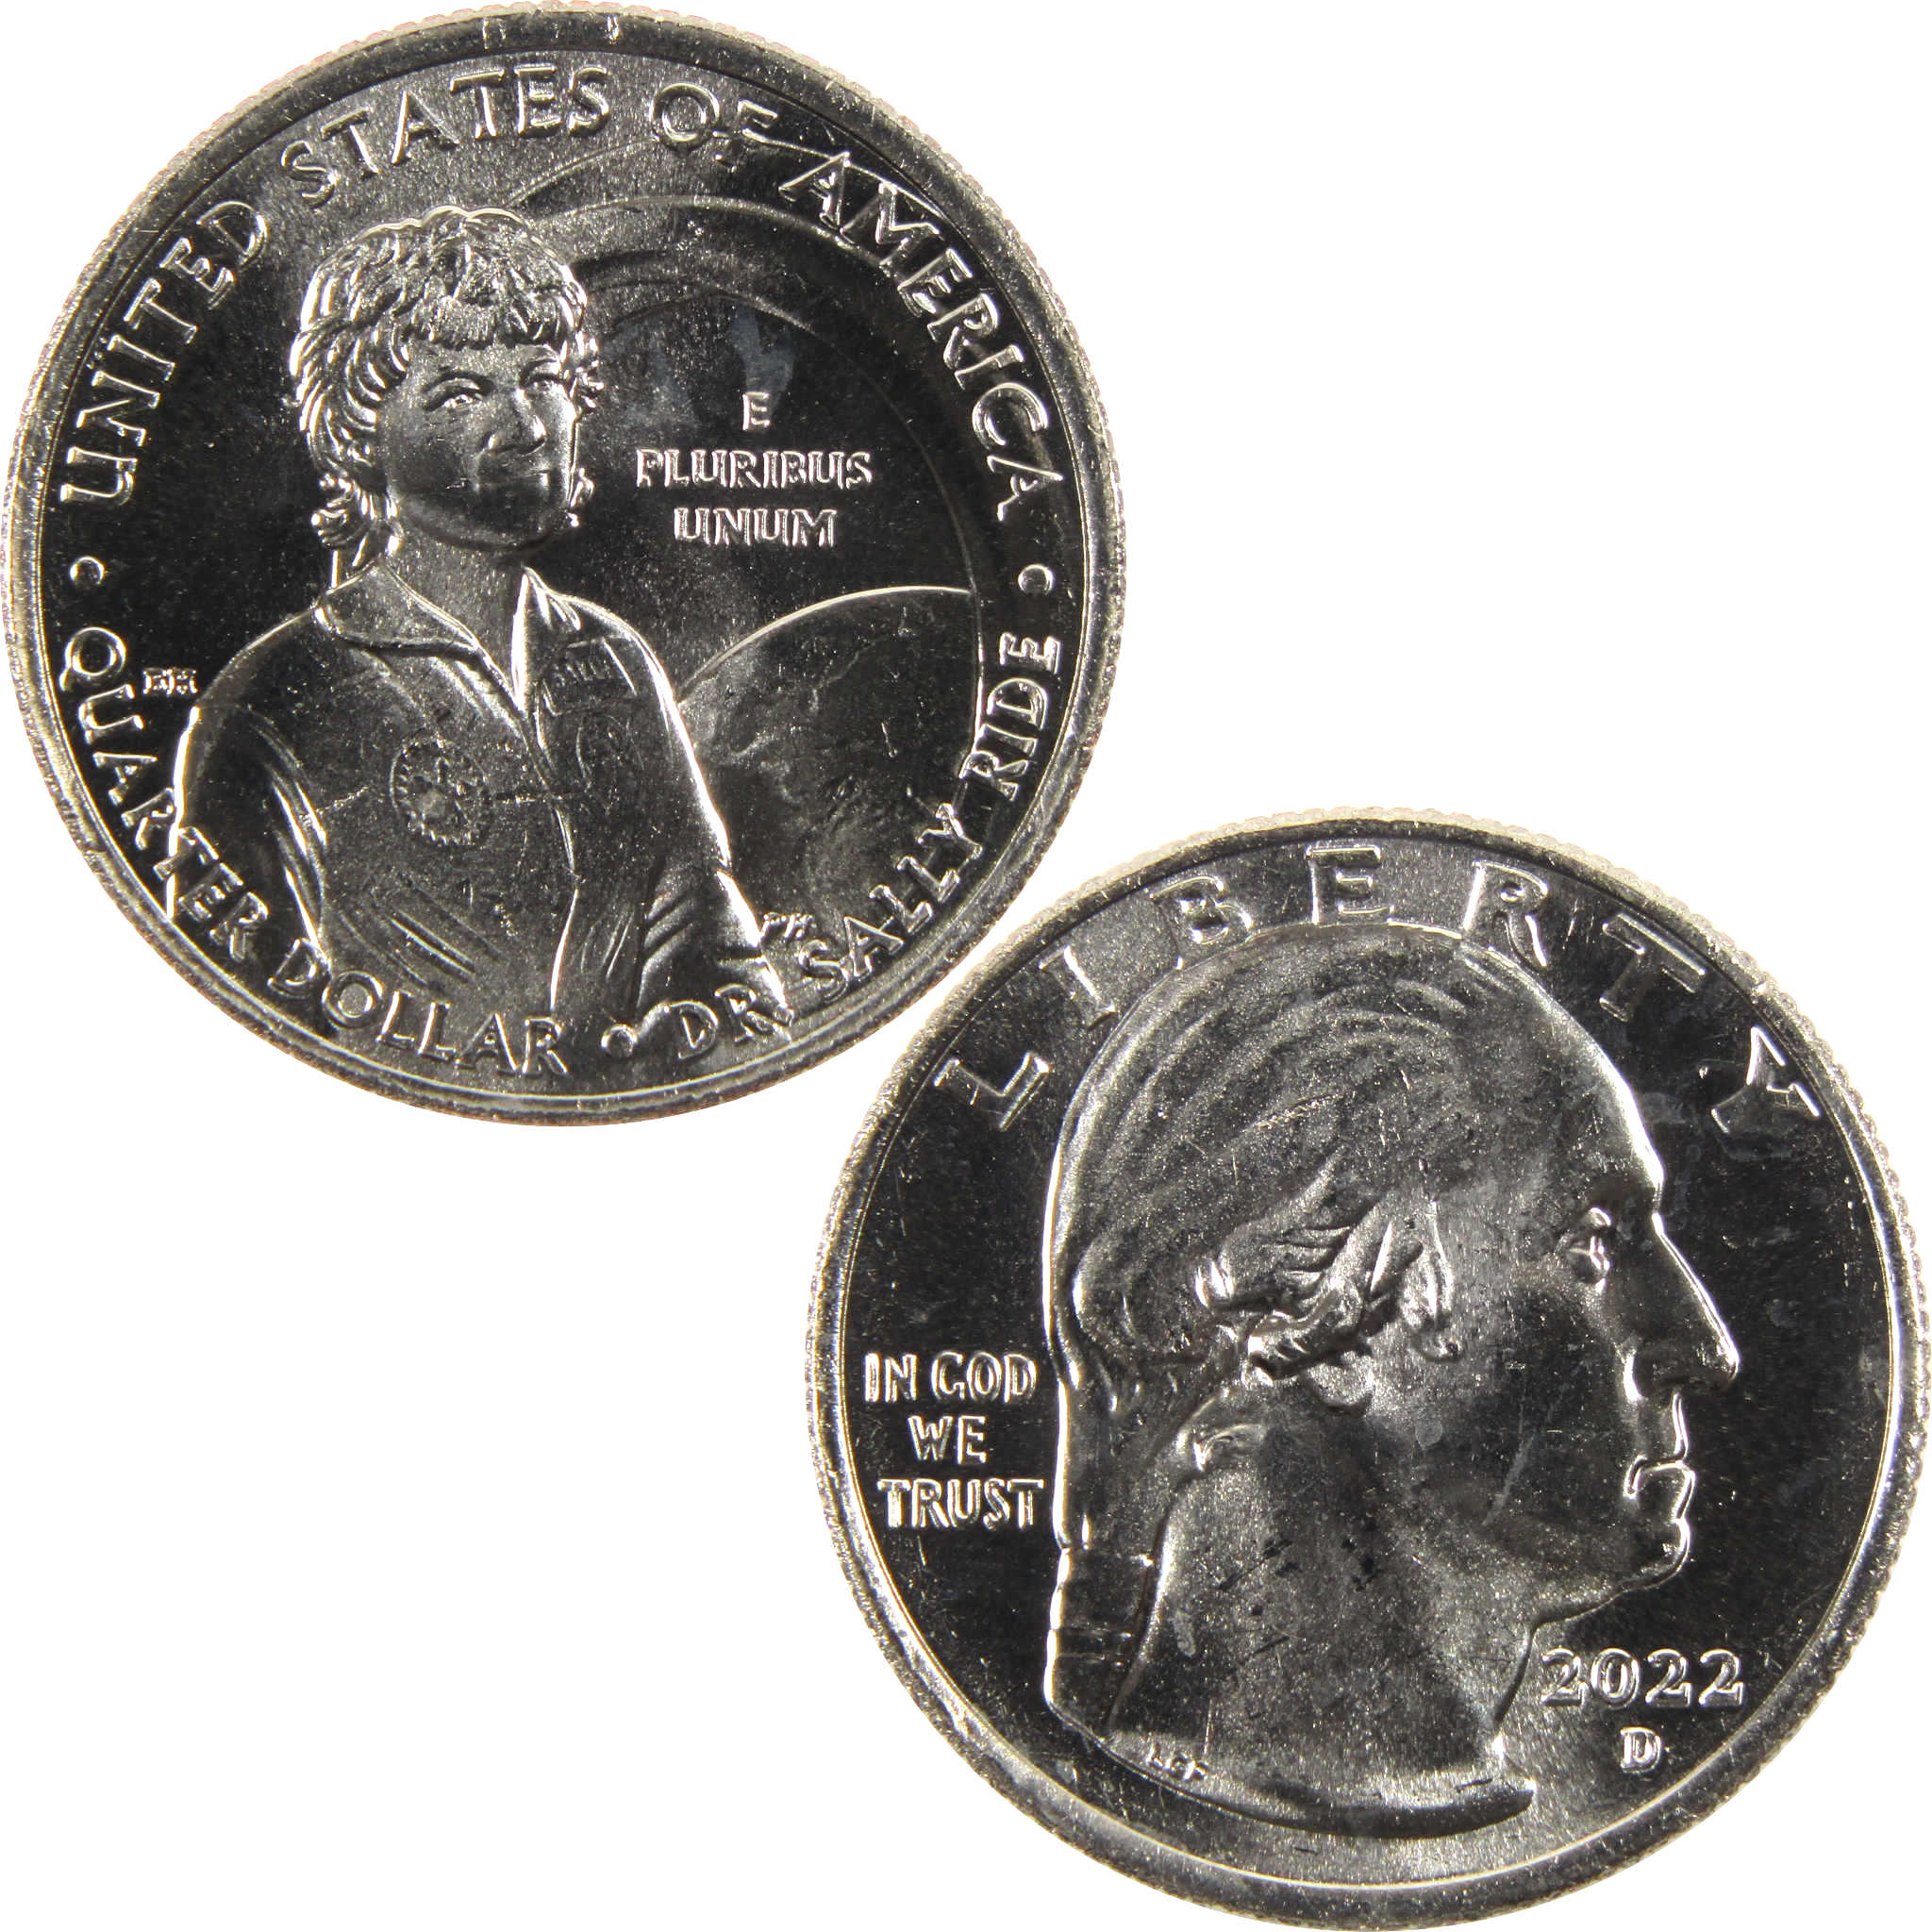 2022 D Sally Ride American Women Quarter BU Uncirculated Clad 25c Coin